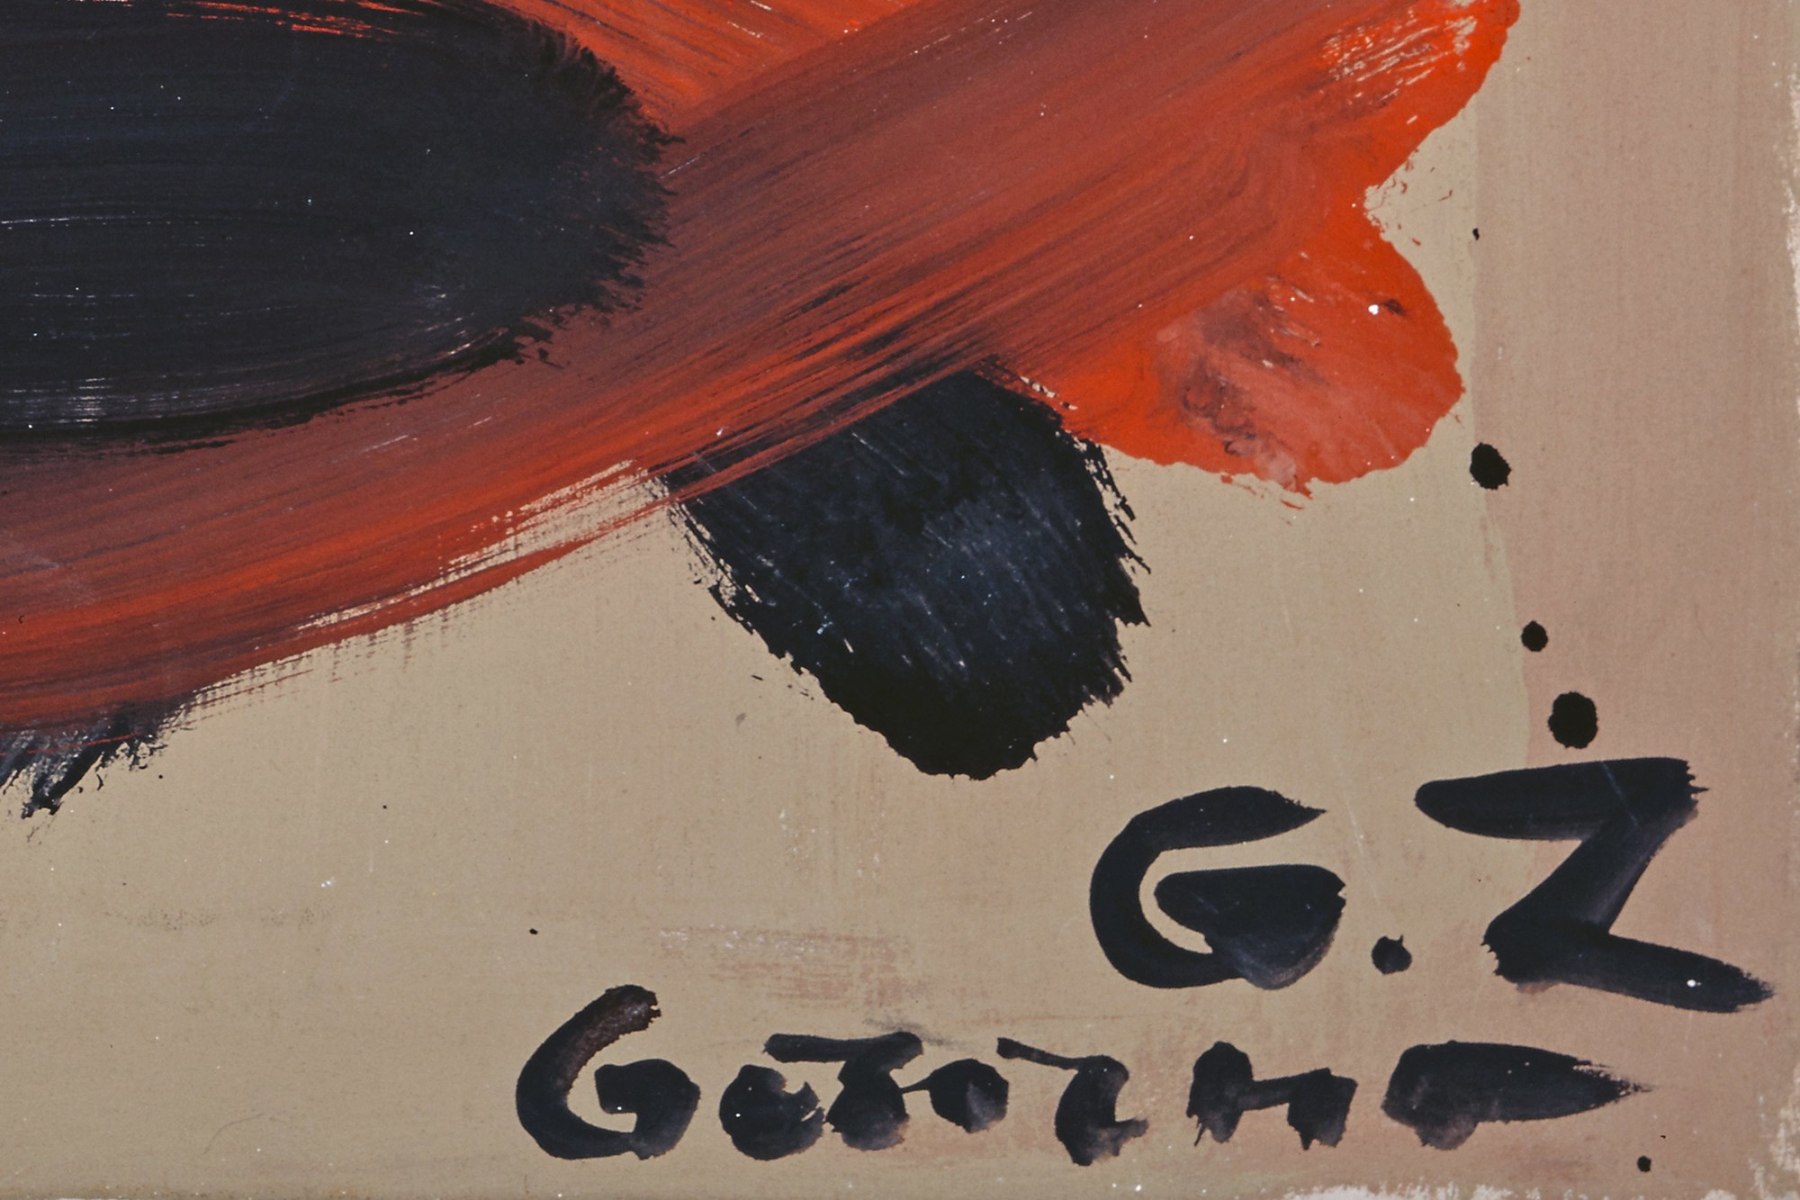 A.R. Penck, G.Z. Gesicht (G.Z. Face), 1975